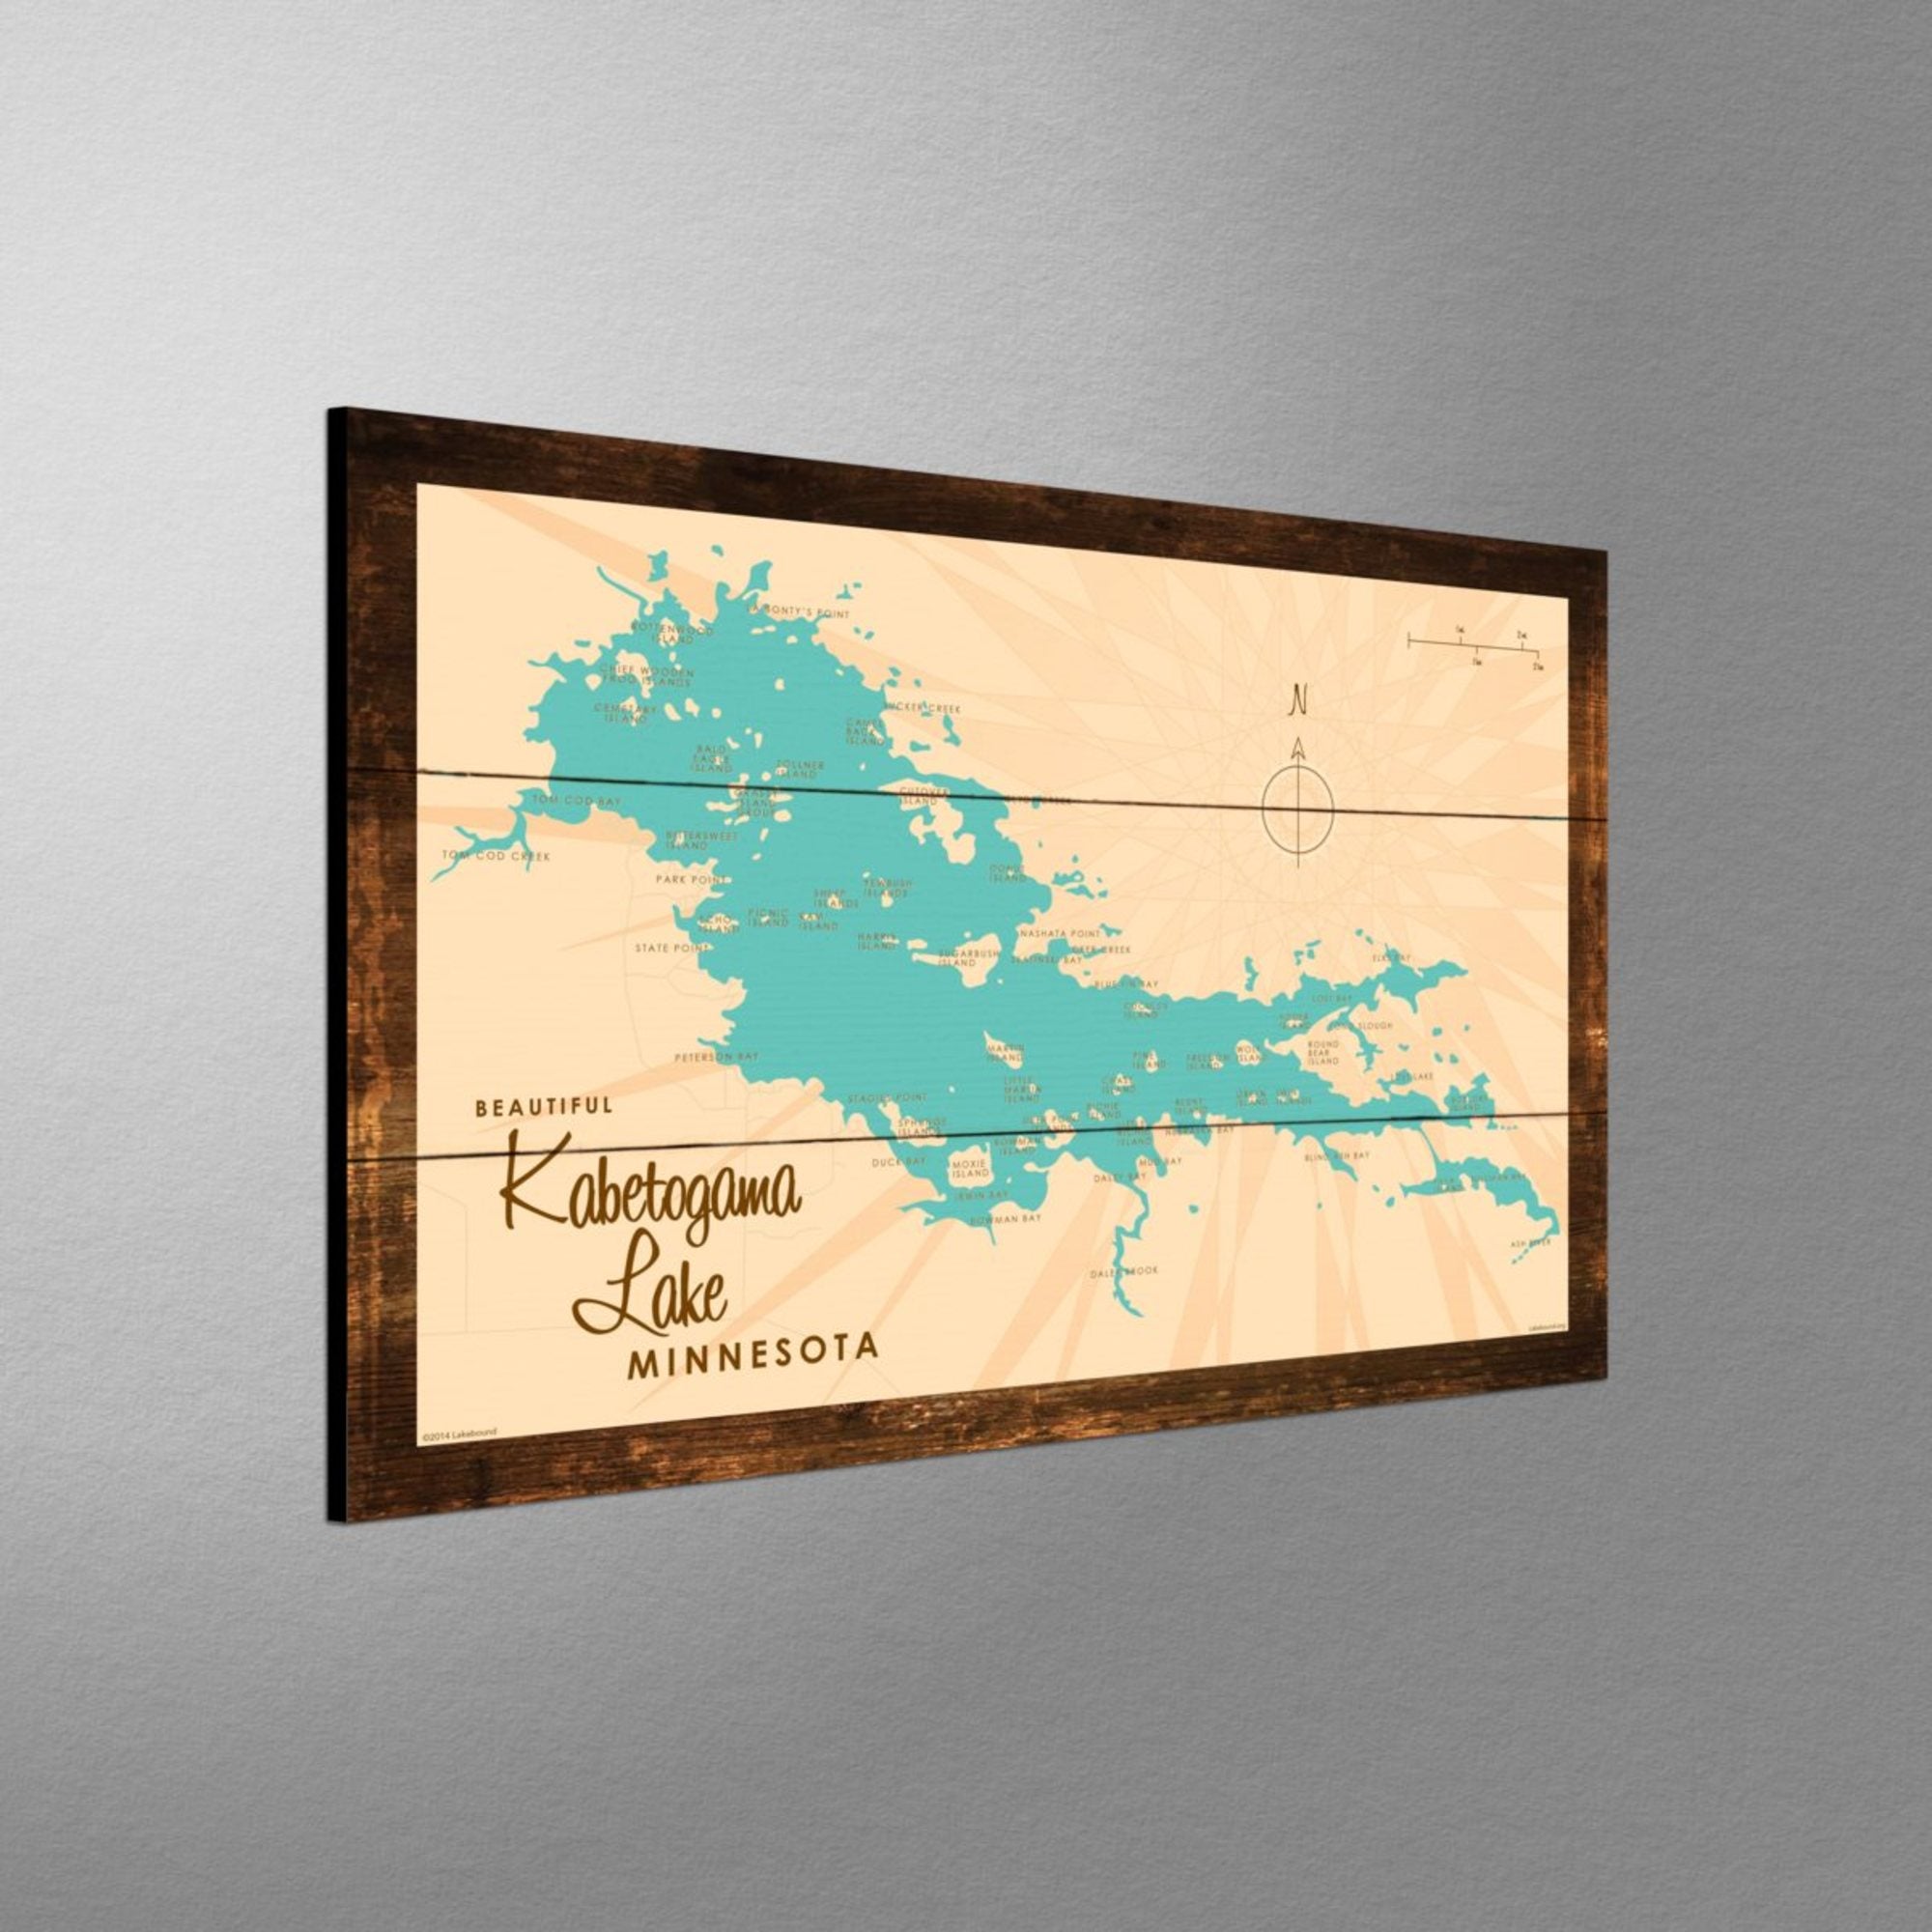 Kabetogama Lake Minnesota, Rustic Wood Sign Map Art